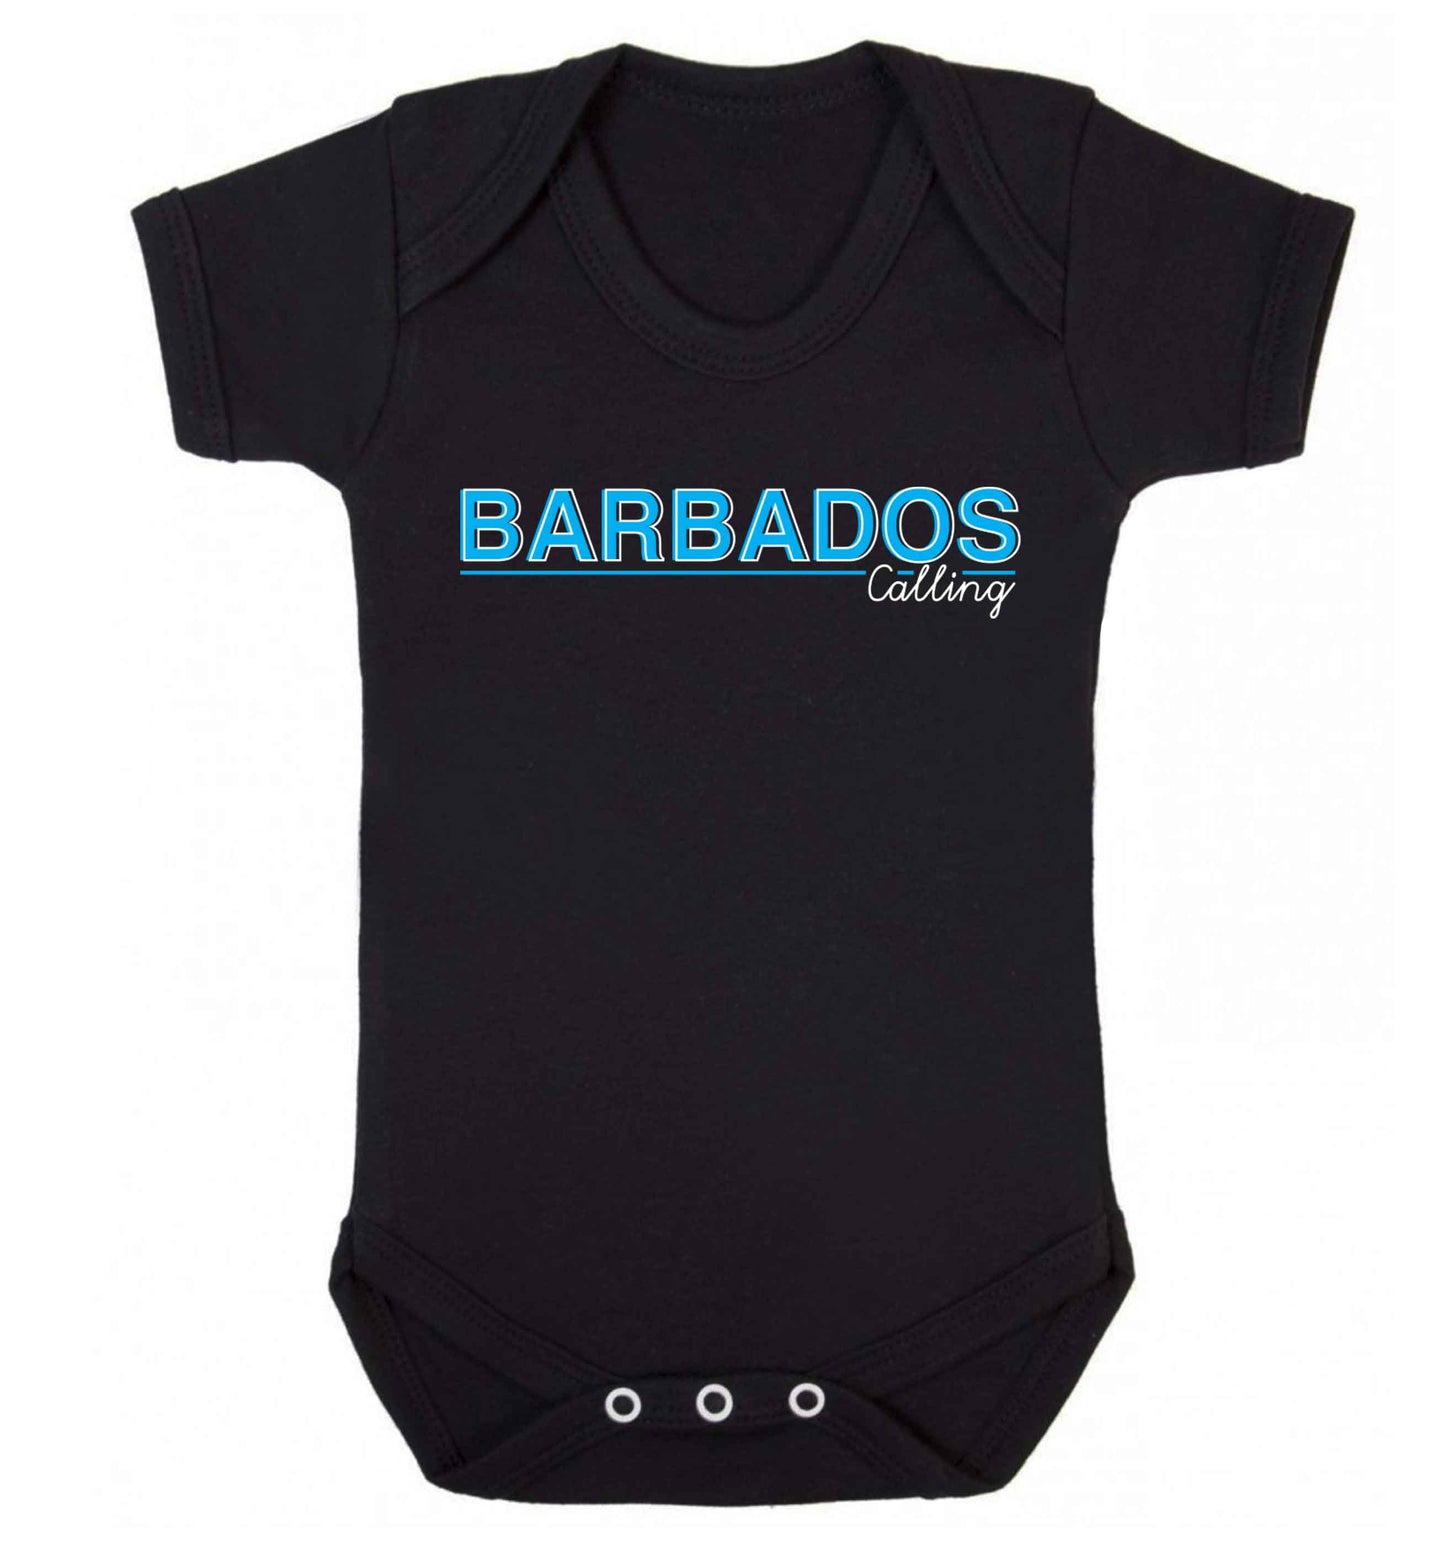 Barbados calling Baby Vest black 18-24 months